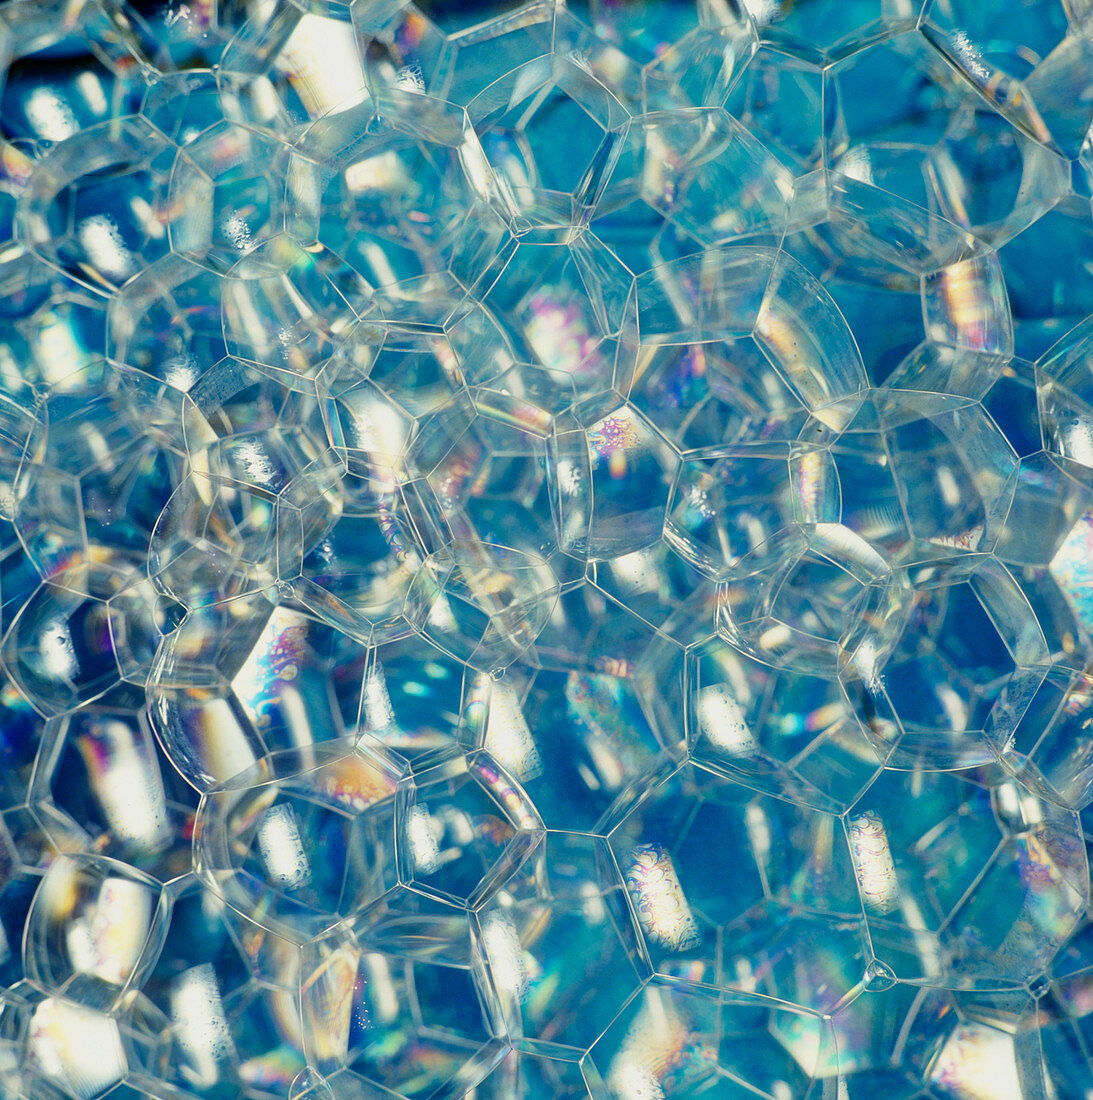 Light interference patterns on soap bubbles